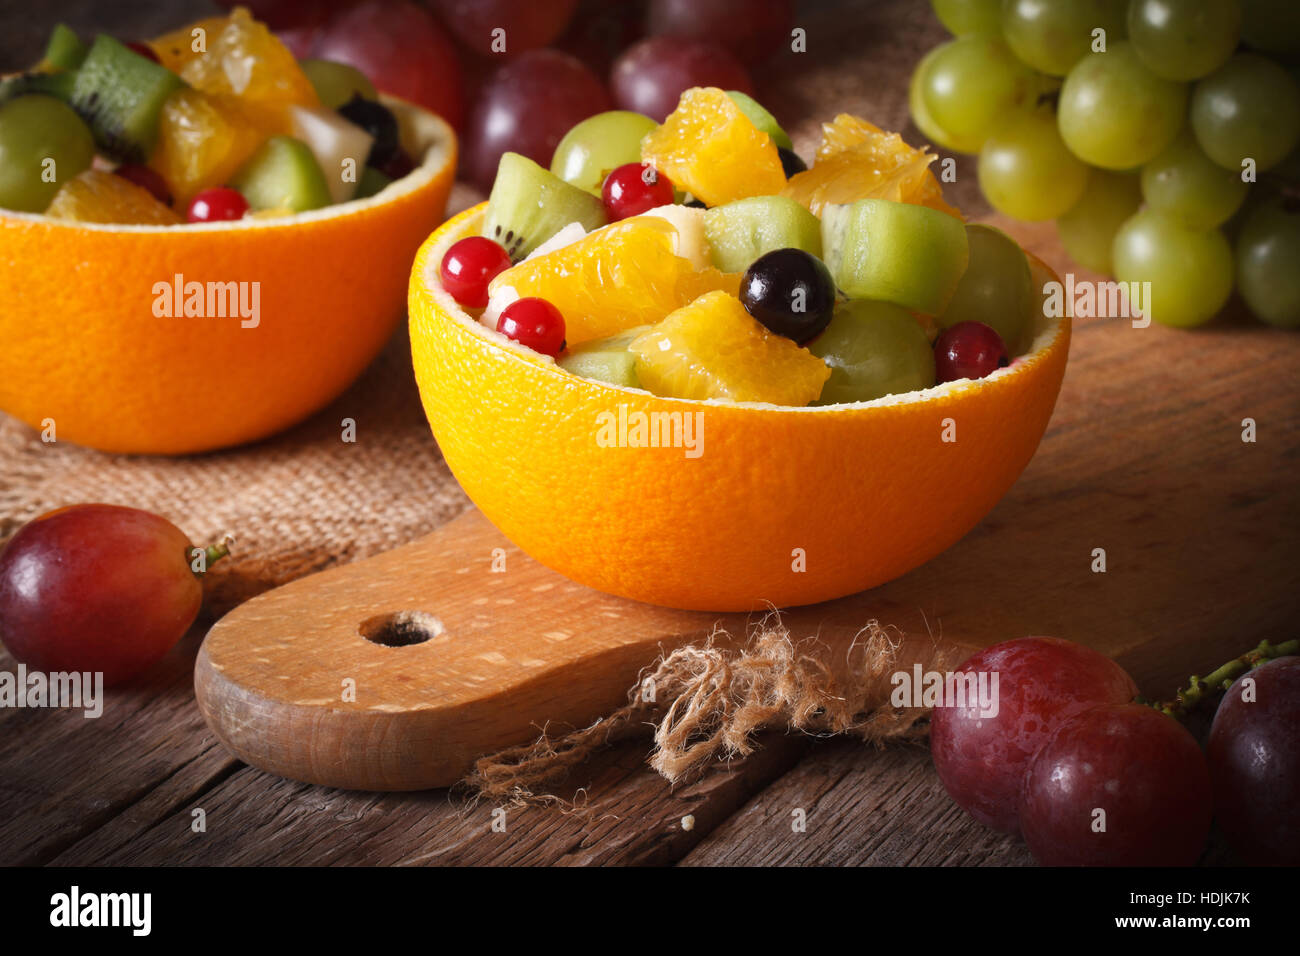 Oranges stuffed with fresh fruit salad close-up on the table. horizontal Stock Photo